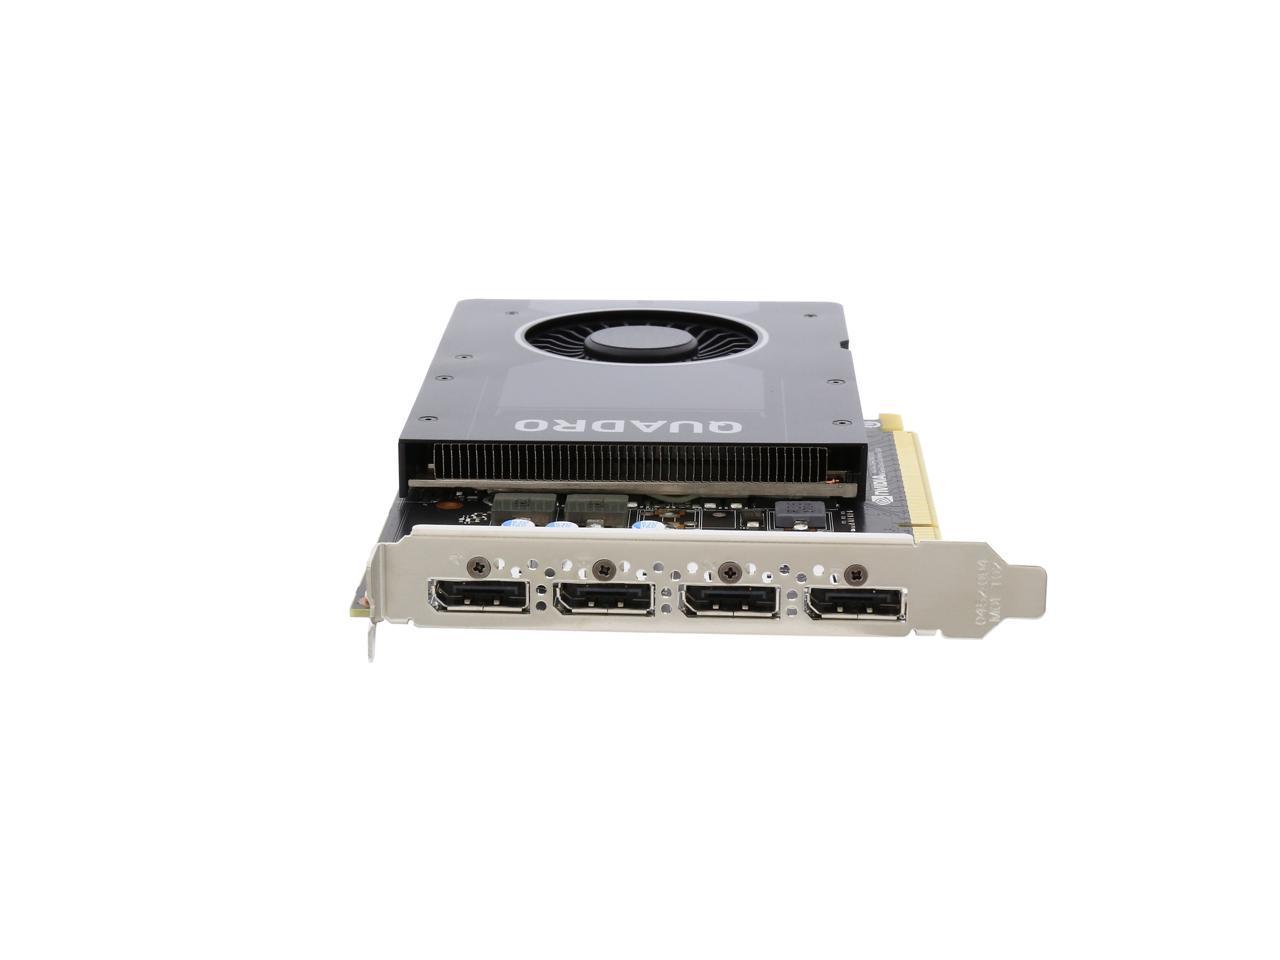 PNY Quadro P2000 VCQP2000-PB 5GB 160-bit GDDR5 PCI Express 3.0 x16 Video Cards - Workstation